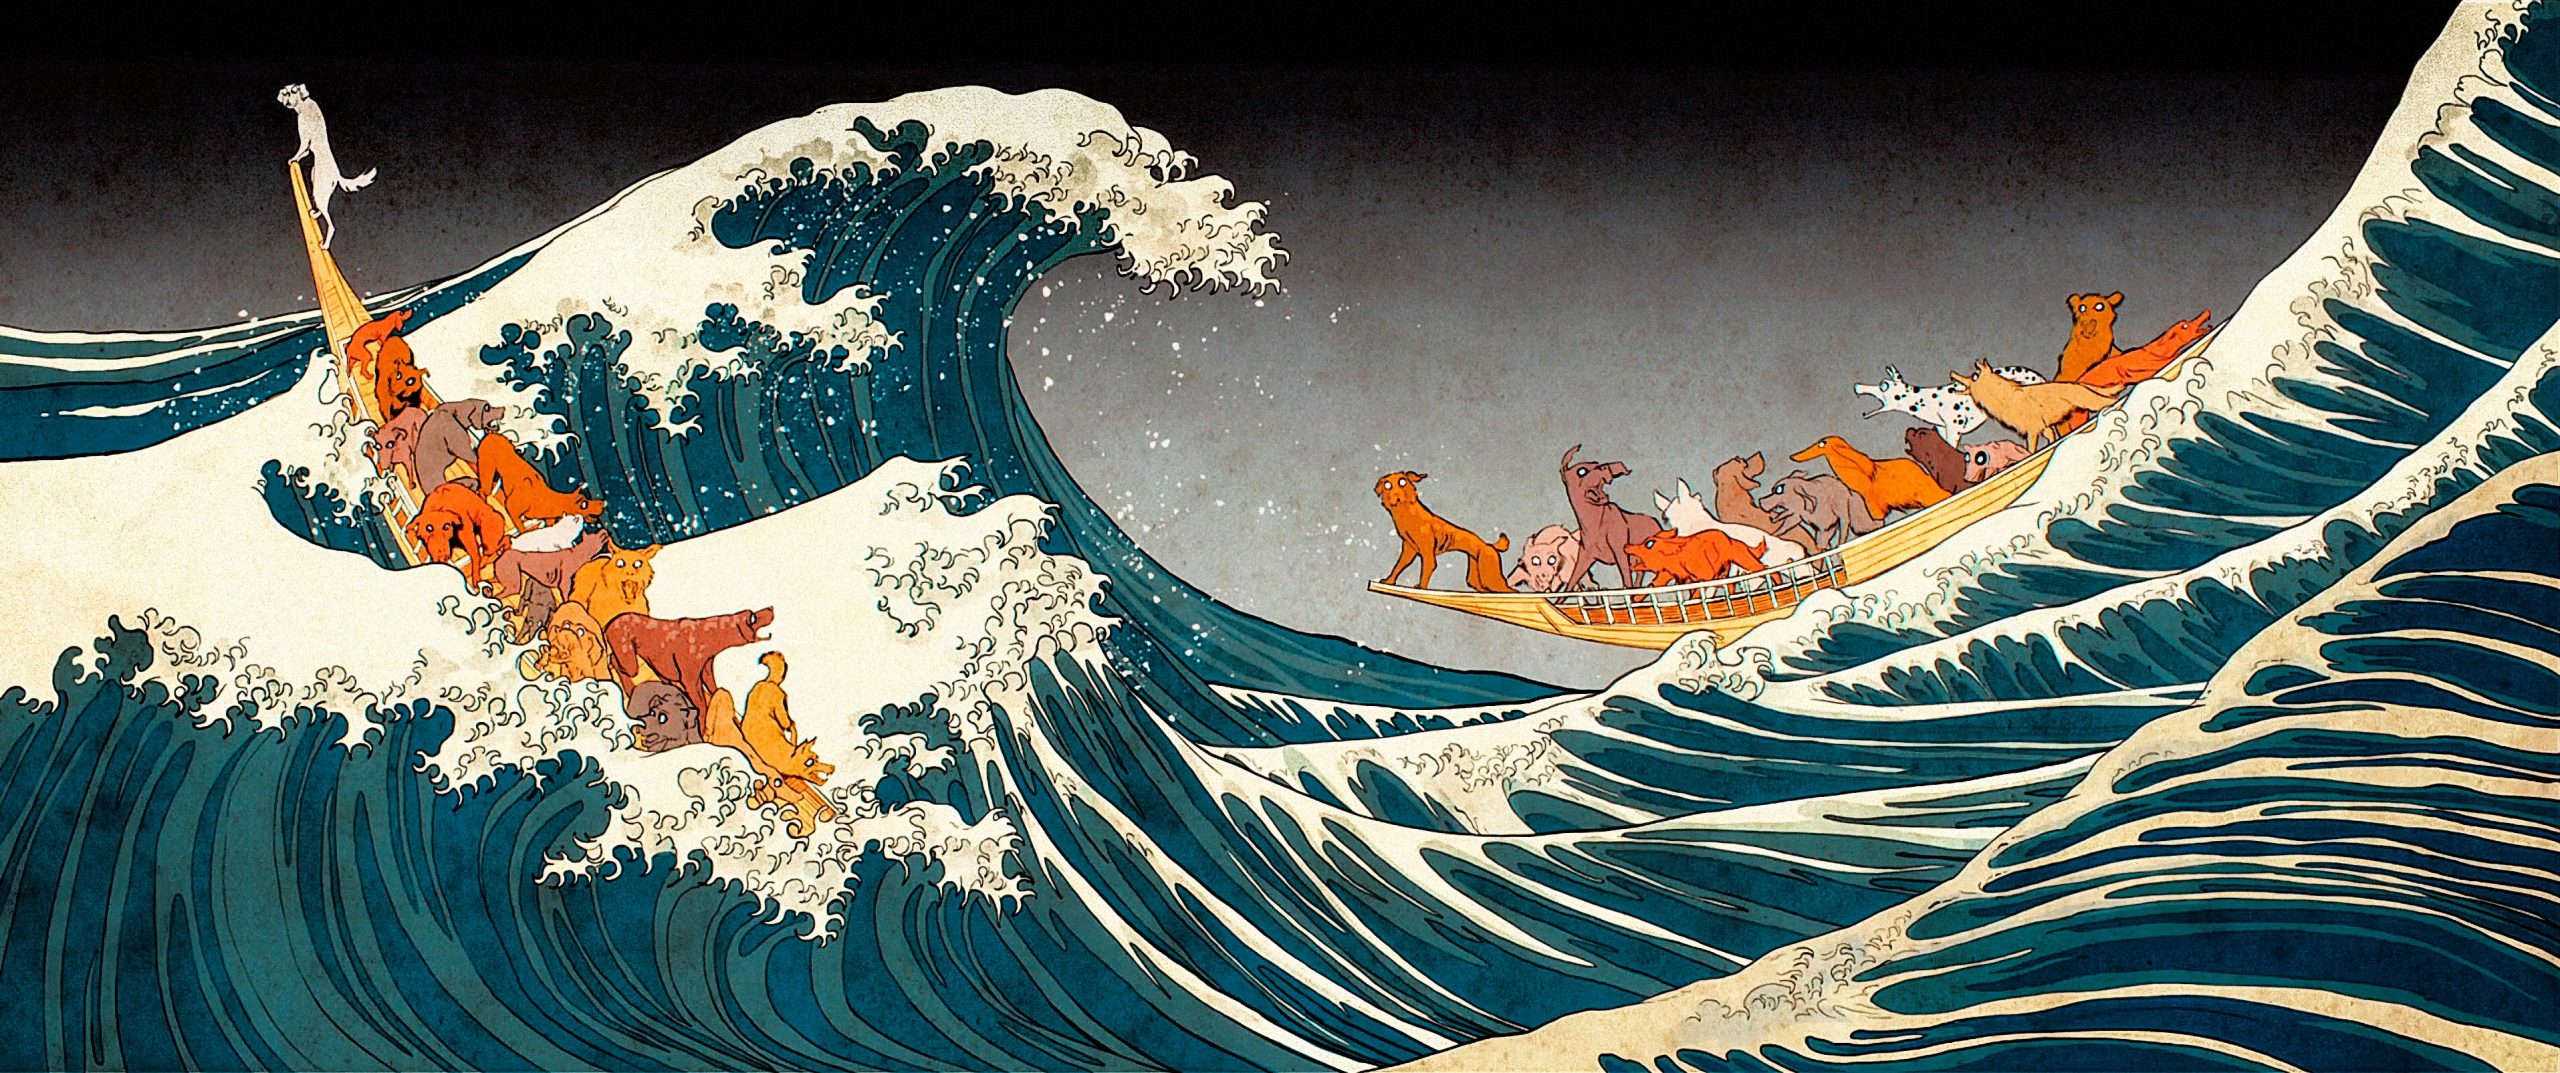 The Great Wave Of Kanagawa By Hokusai Painting, Isle Of Dogs Wallpaper -  Wallpaperforu